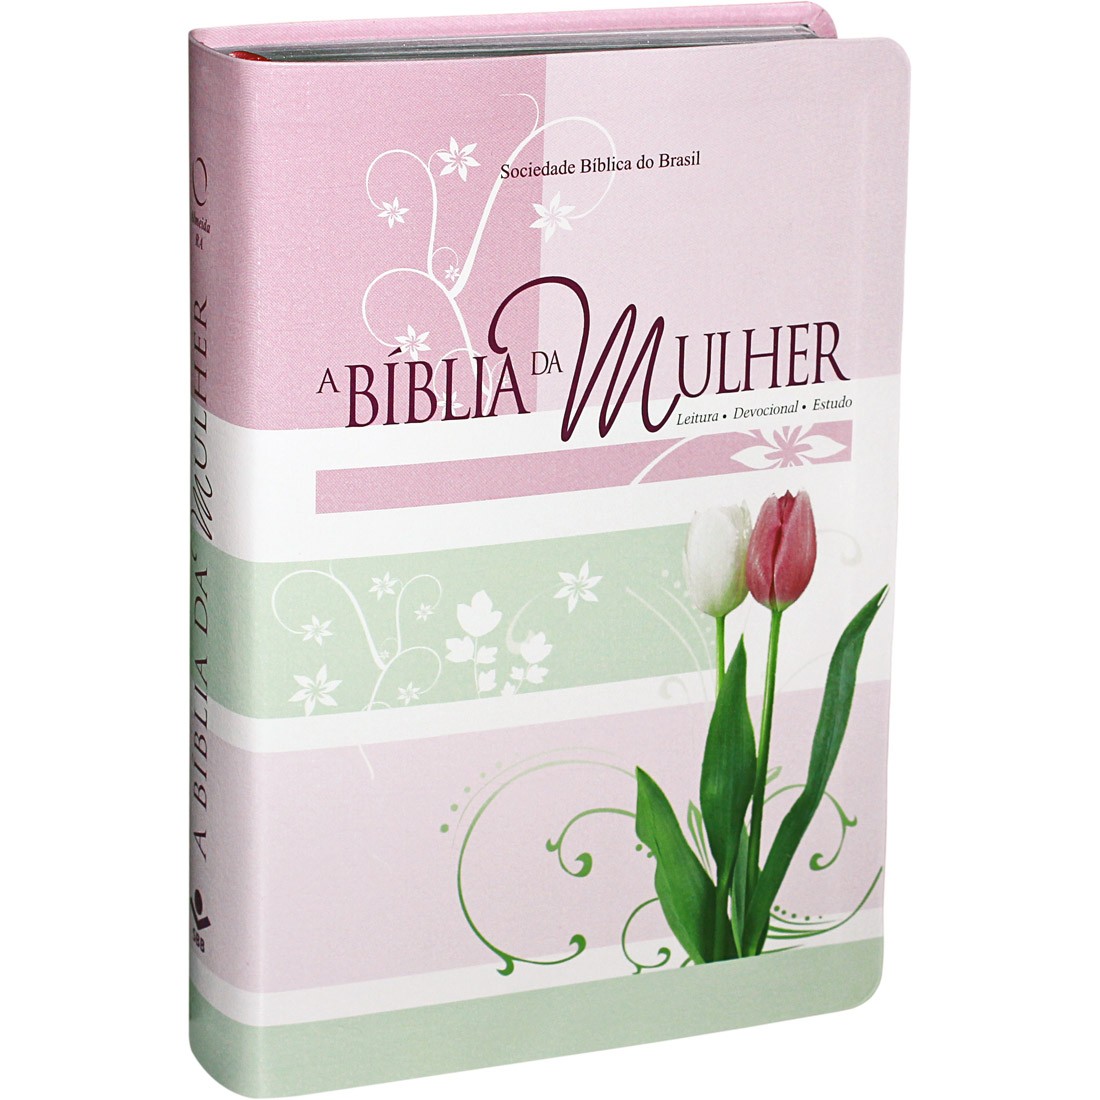 PORTUGAIS BIBLE ALMEIDA RA055 BIBLE DES FEMMES, SOUPLE ROSE, TRANCHE ARGENT - A BIBLÍA DA MULHER. - ALMEIDA REVISTA E ACTUALIZAD